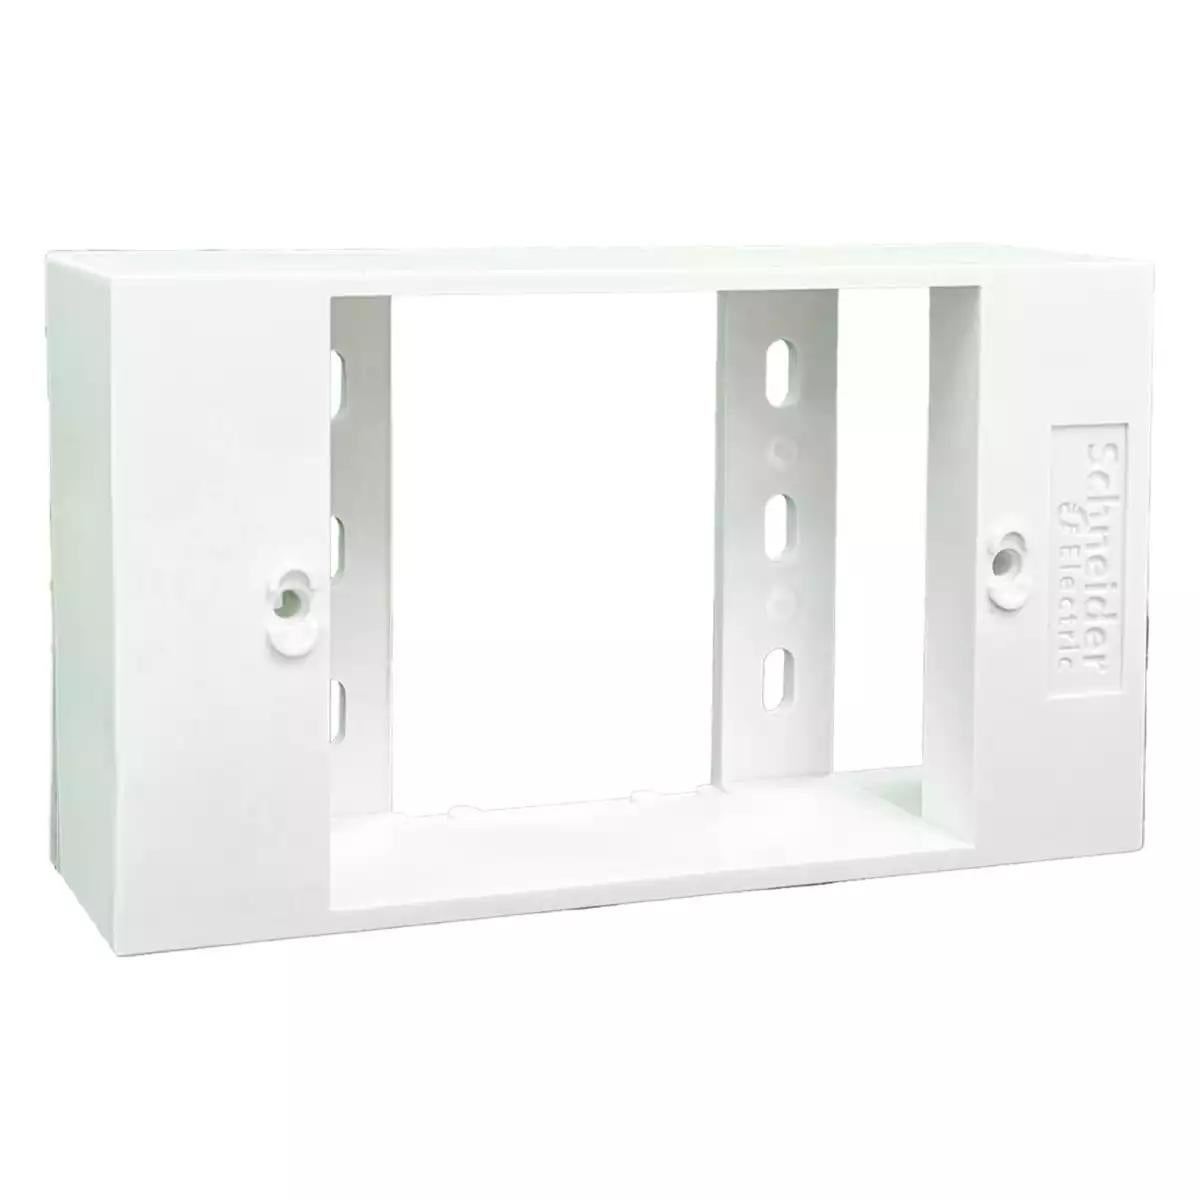 Surface mounting box, AvatarOn A, White